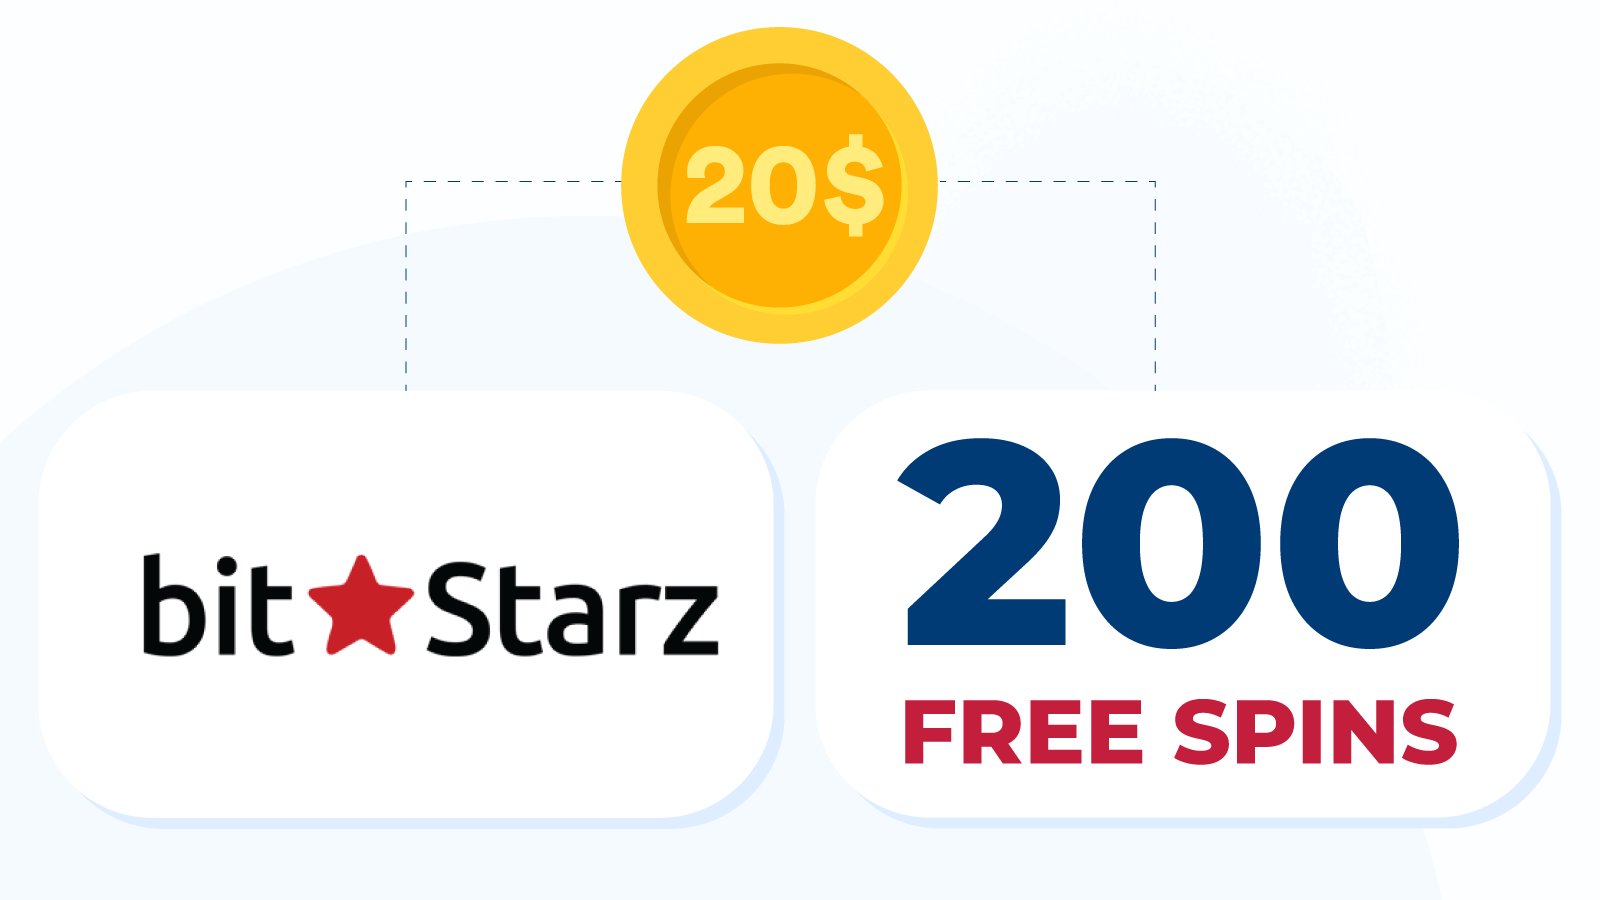 Deposit $20 get 200 free spins at BitStarz Casino